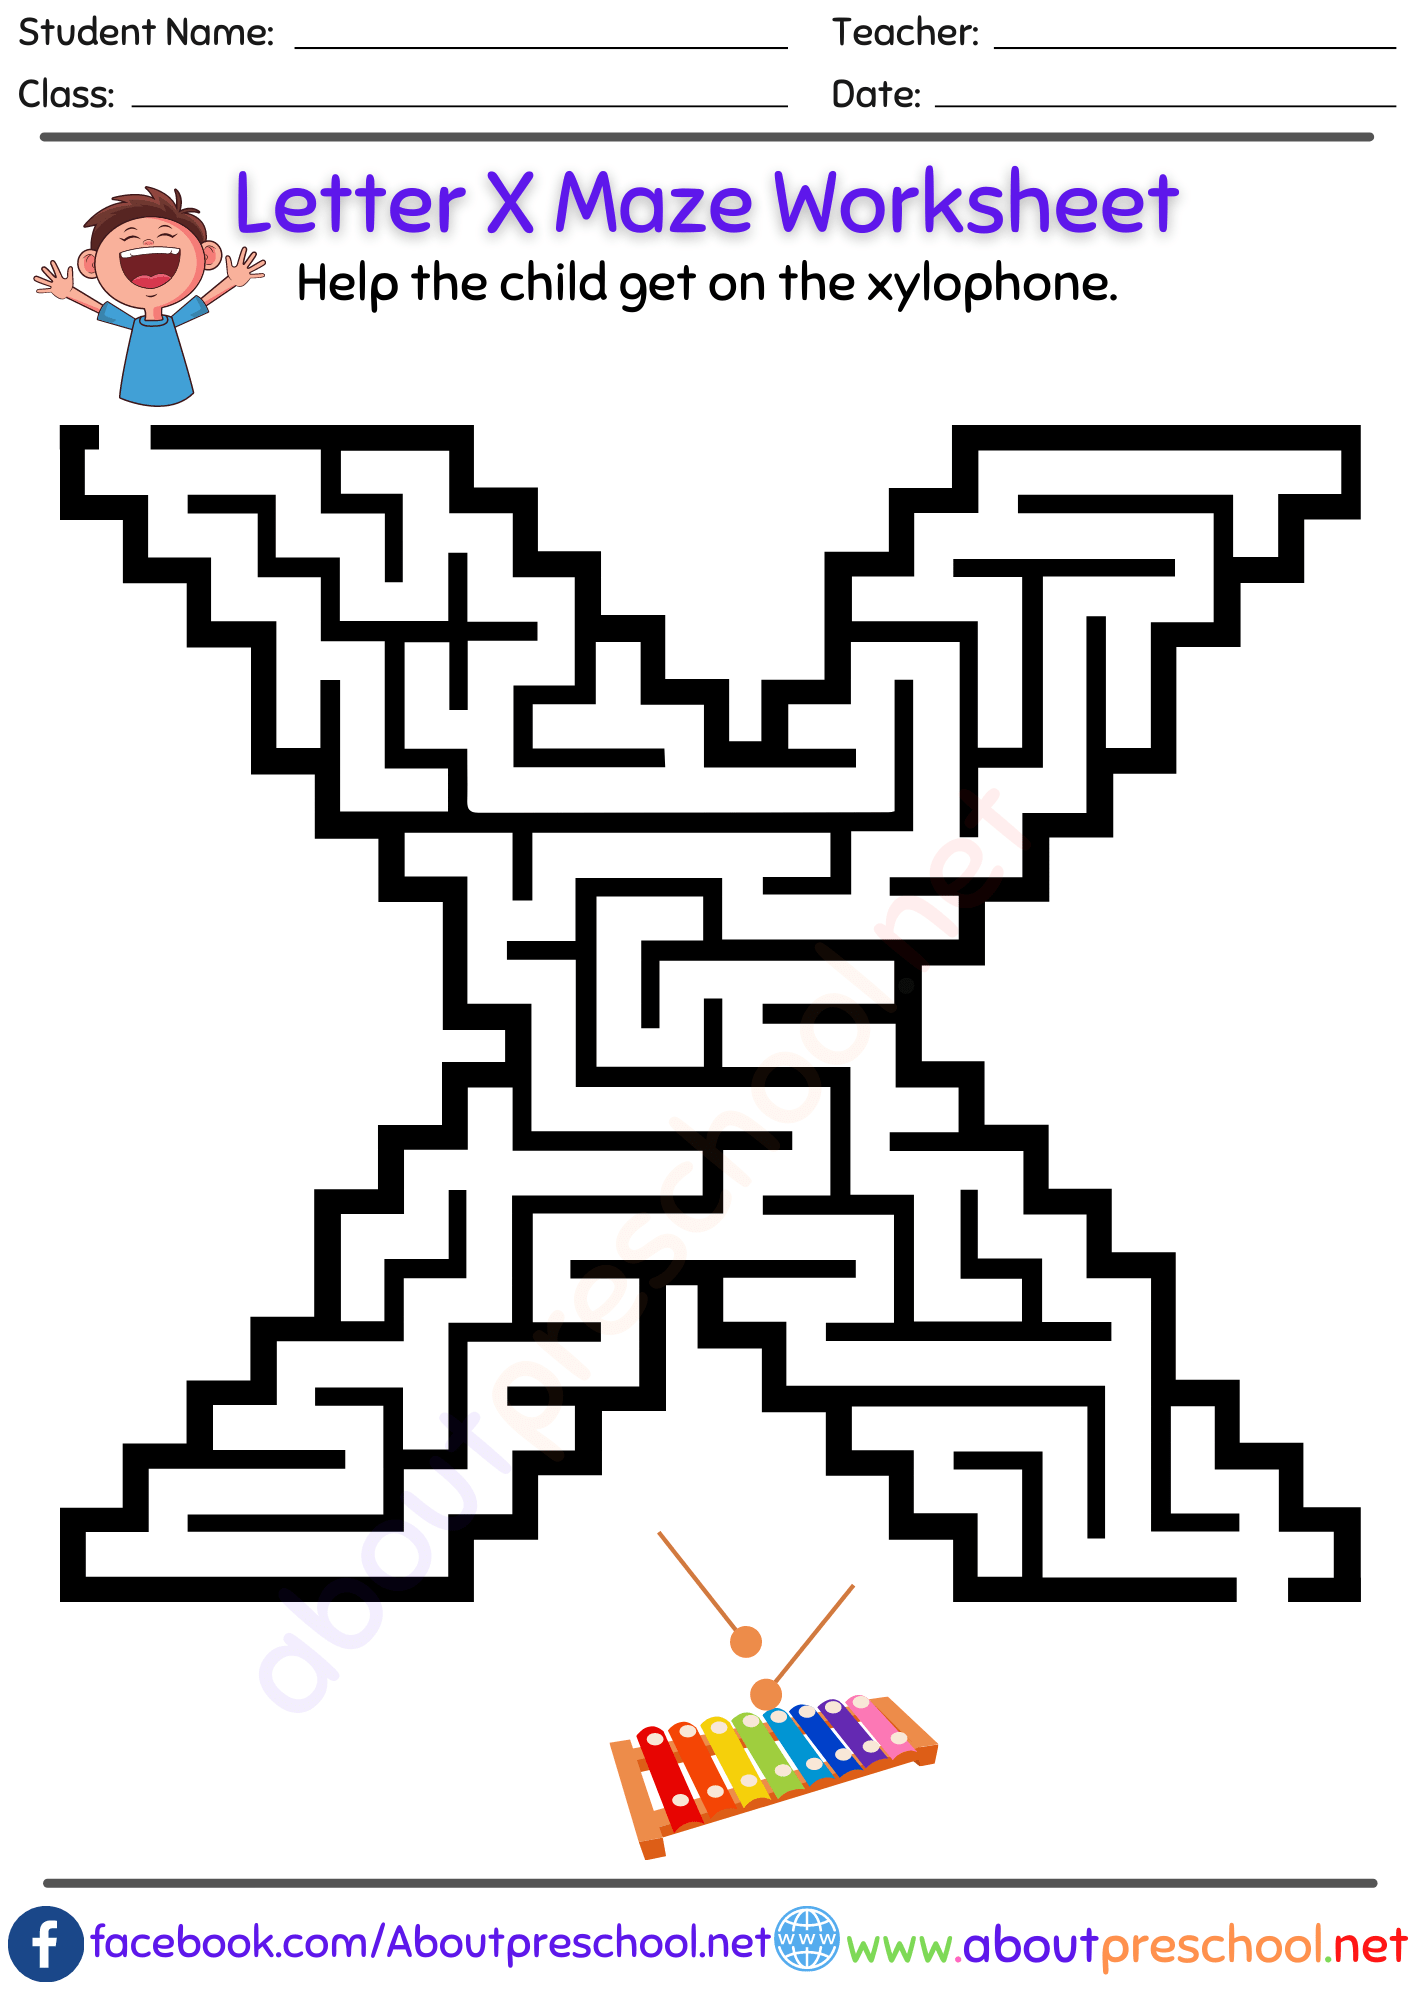 Letter X Maze Worksheet